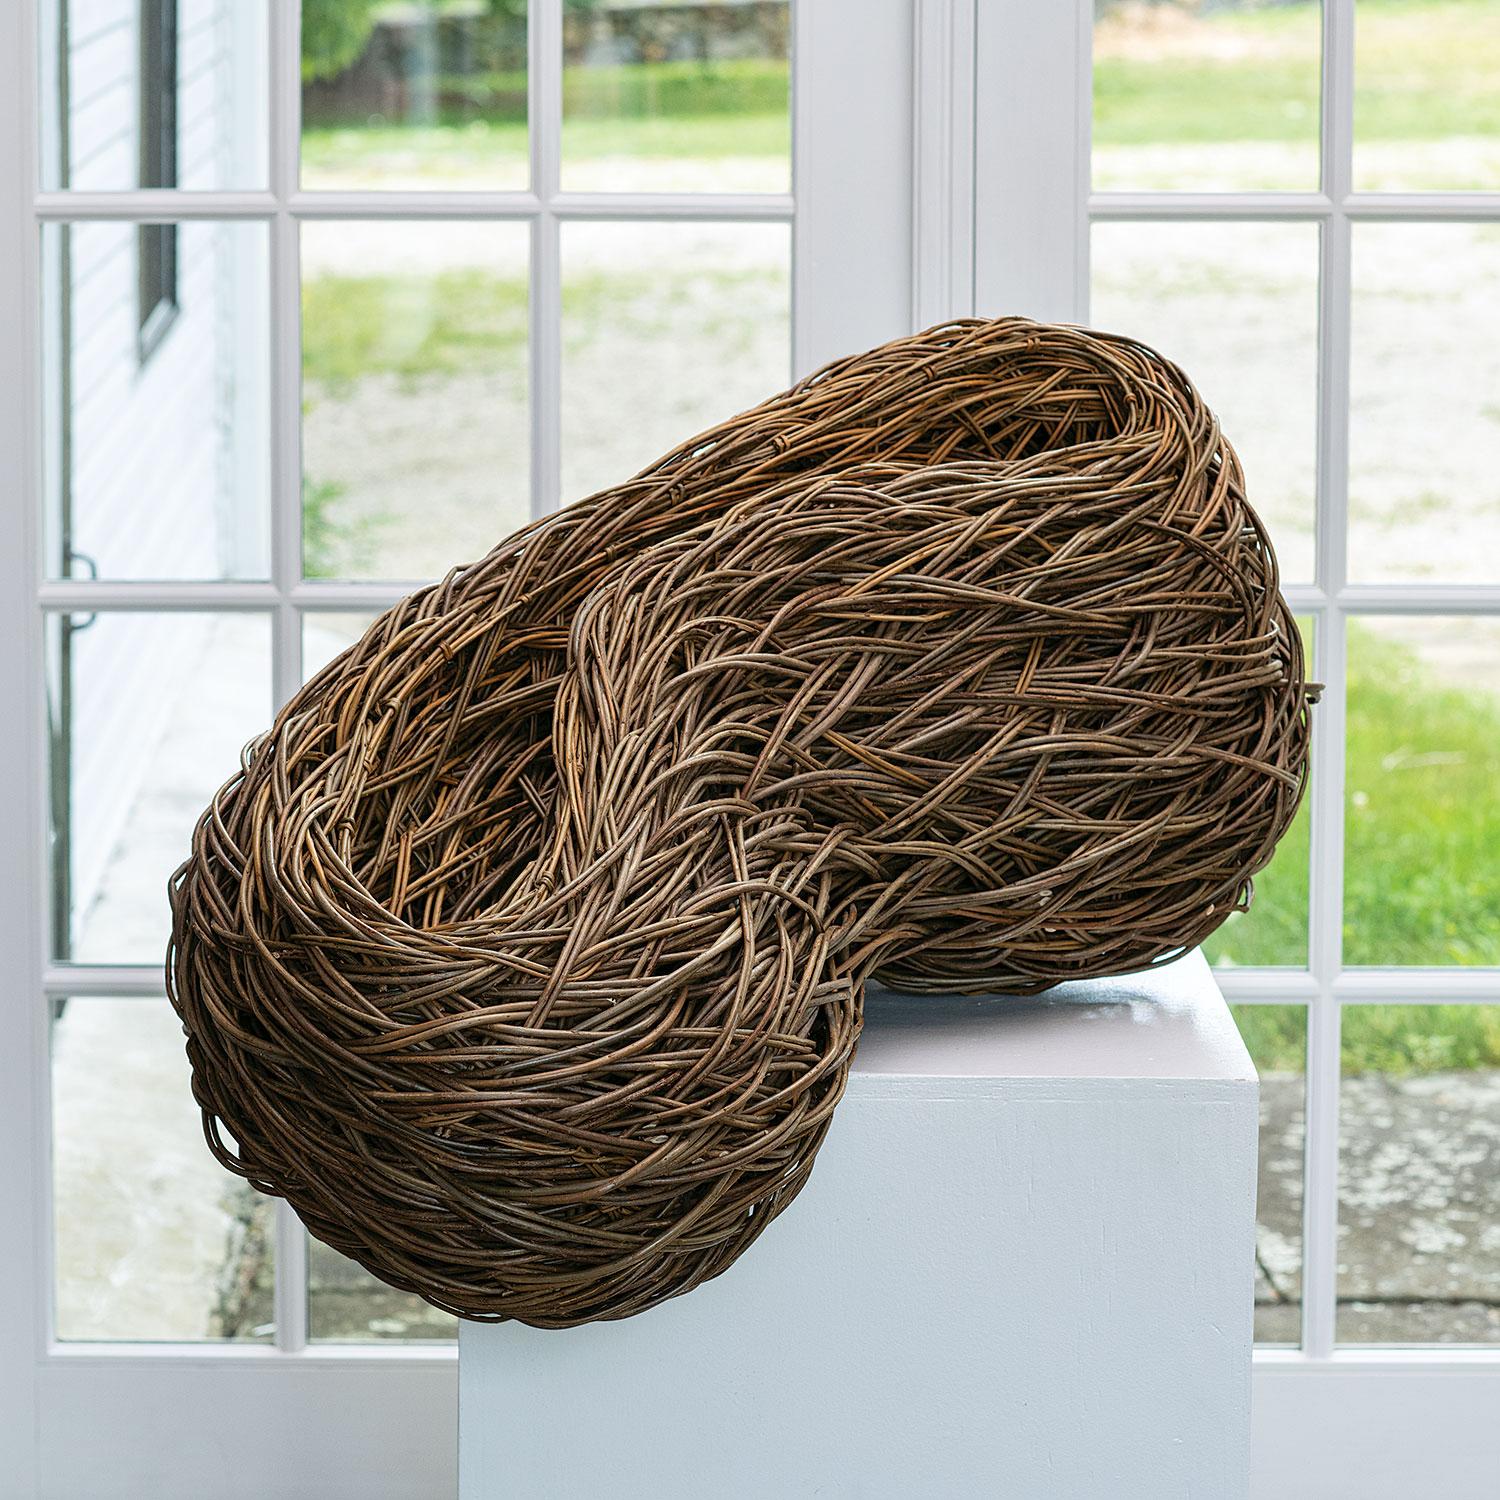 "Poise" Laura Ellen Bacon, Woven Willow Abstract Basket